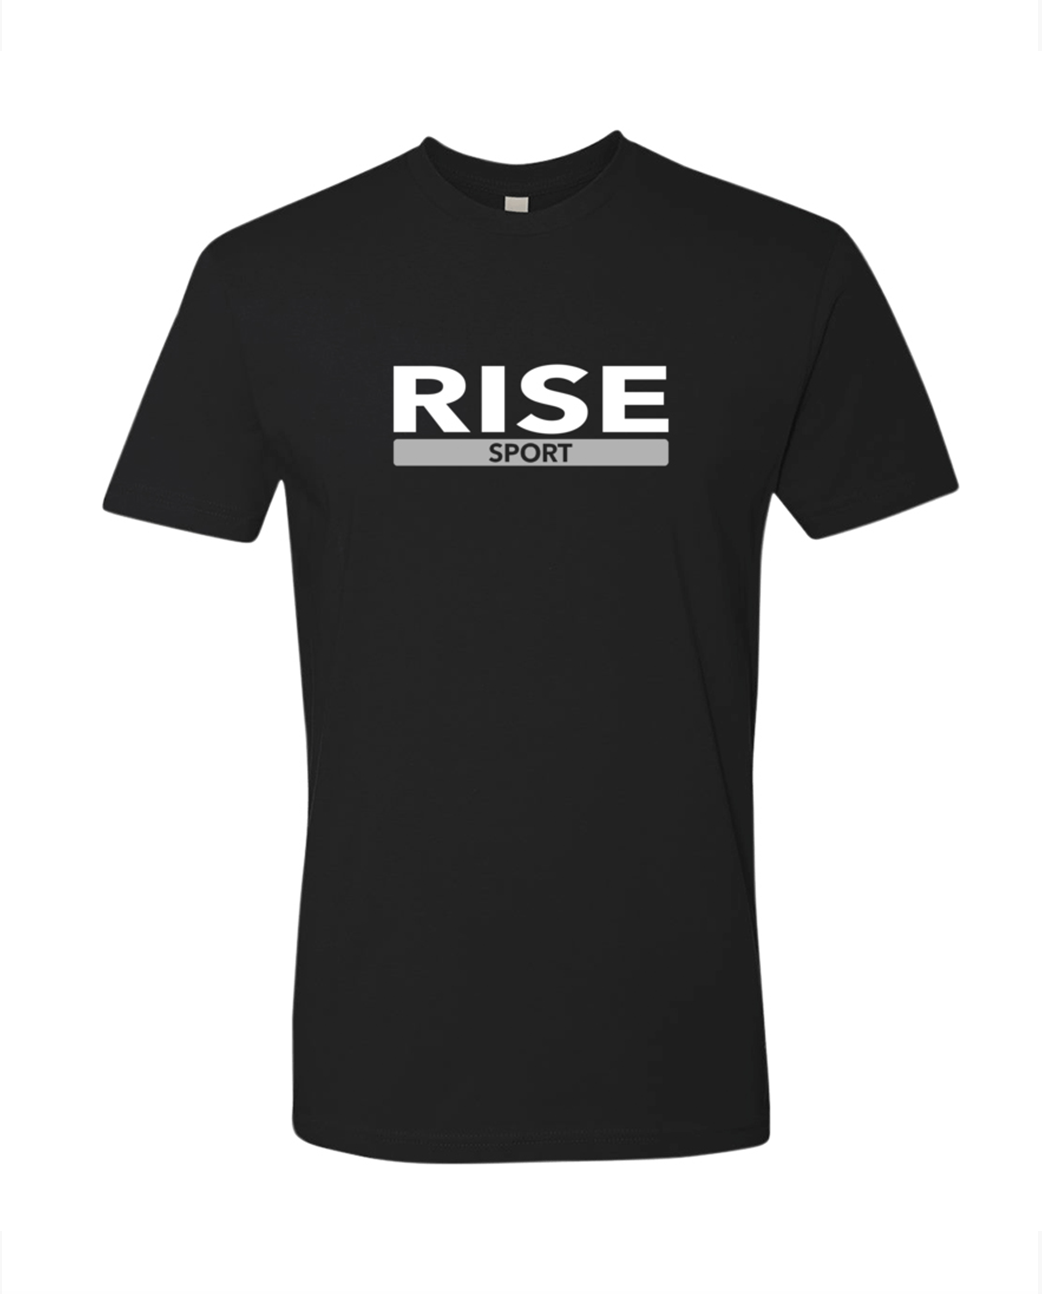 Rise Sport Signature T-shirt Tee Black